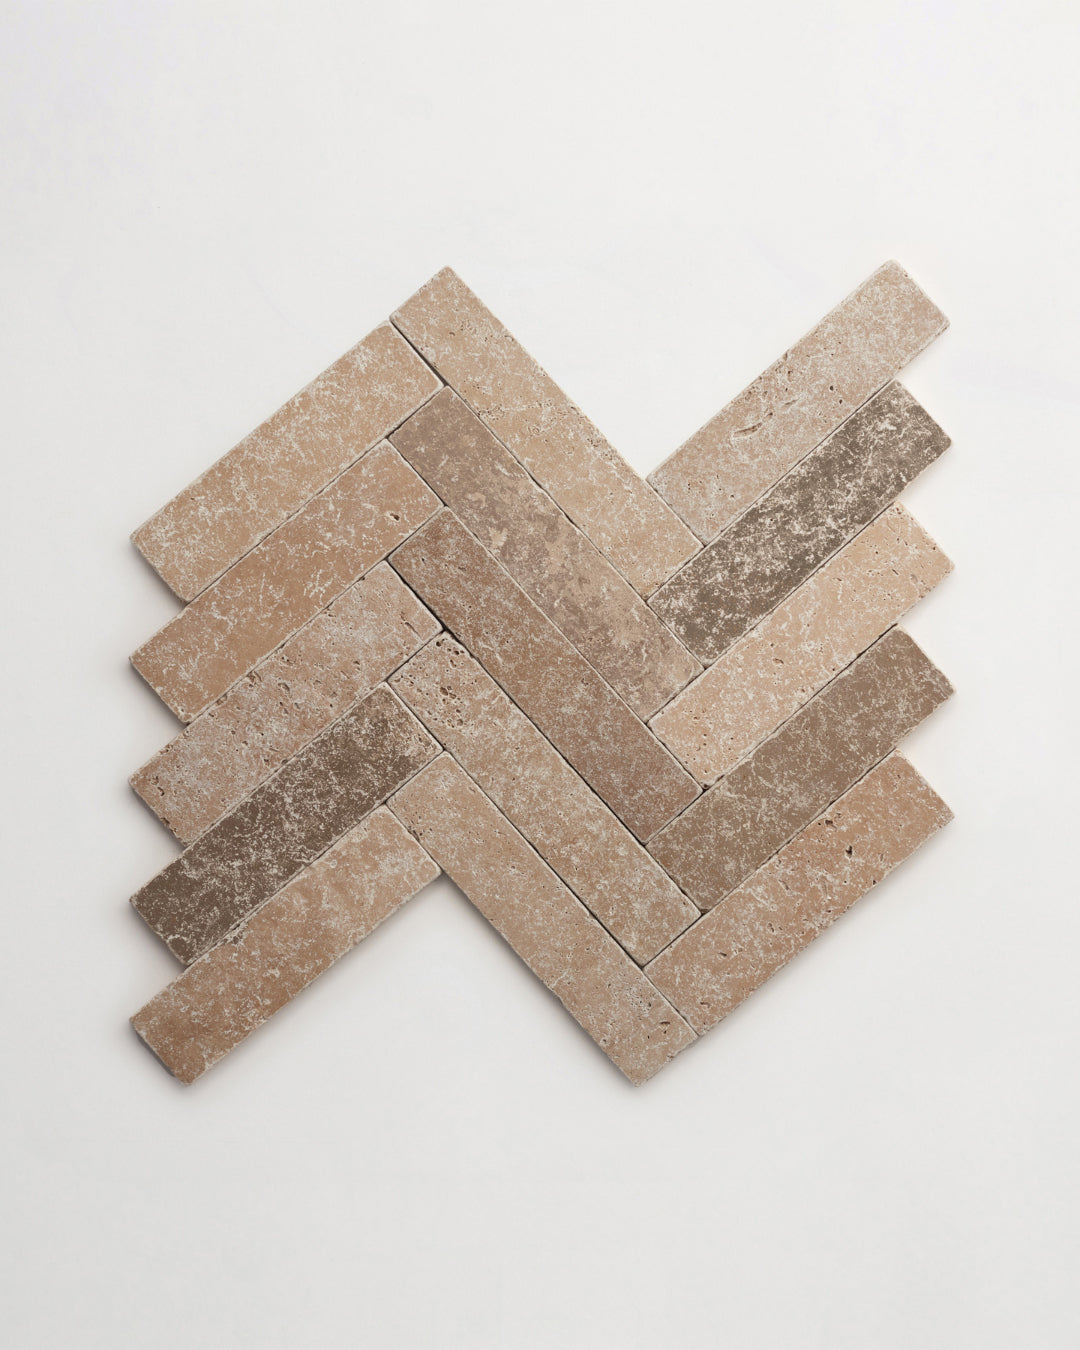 Narrow stone tiles in a herringbone pattern.